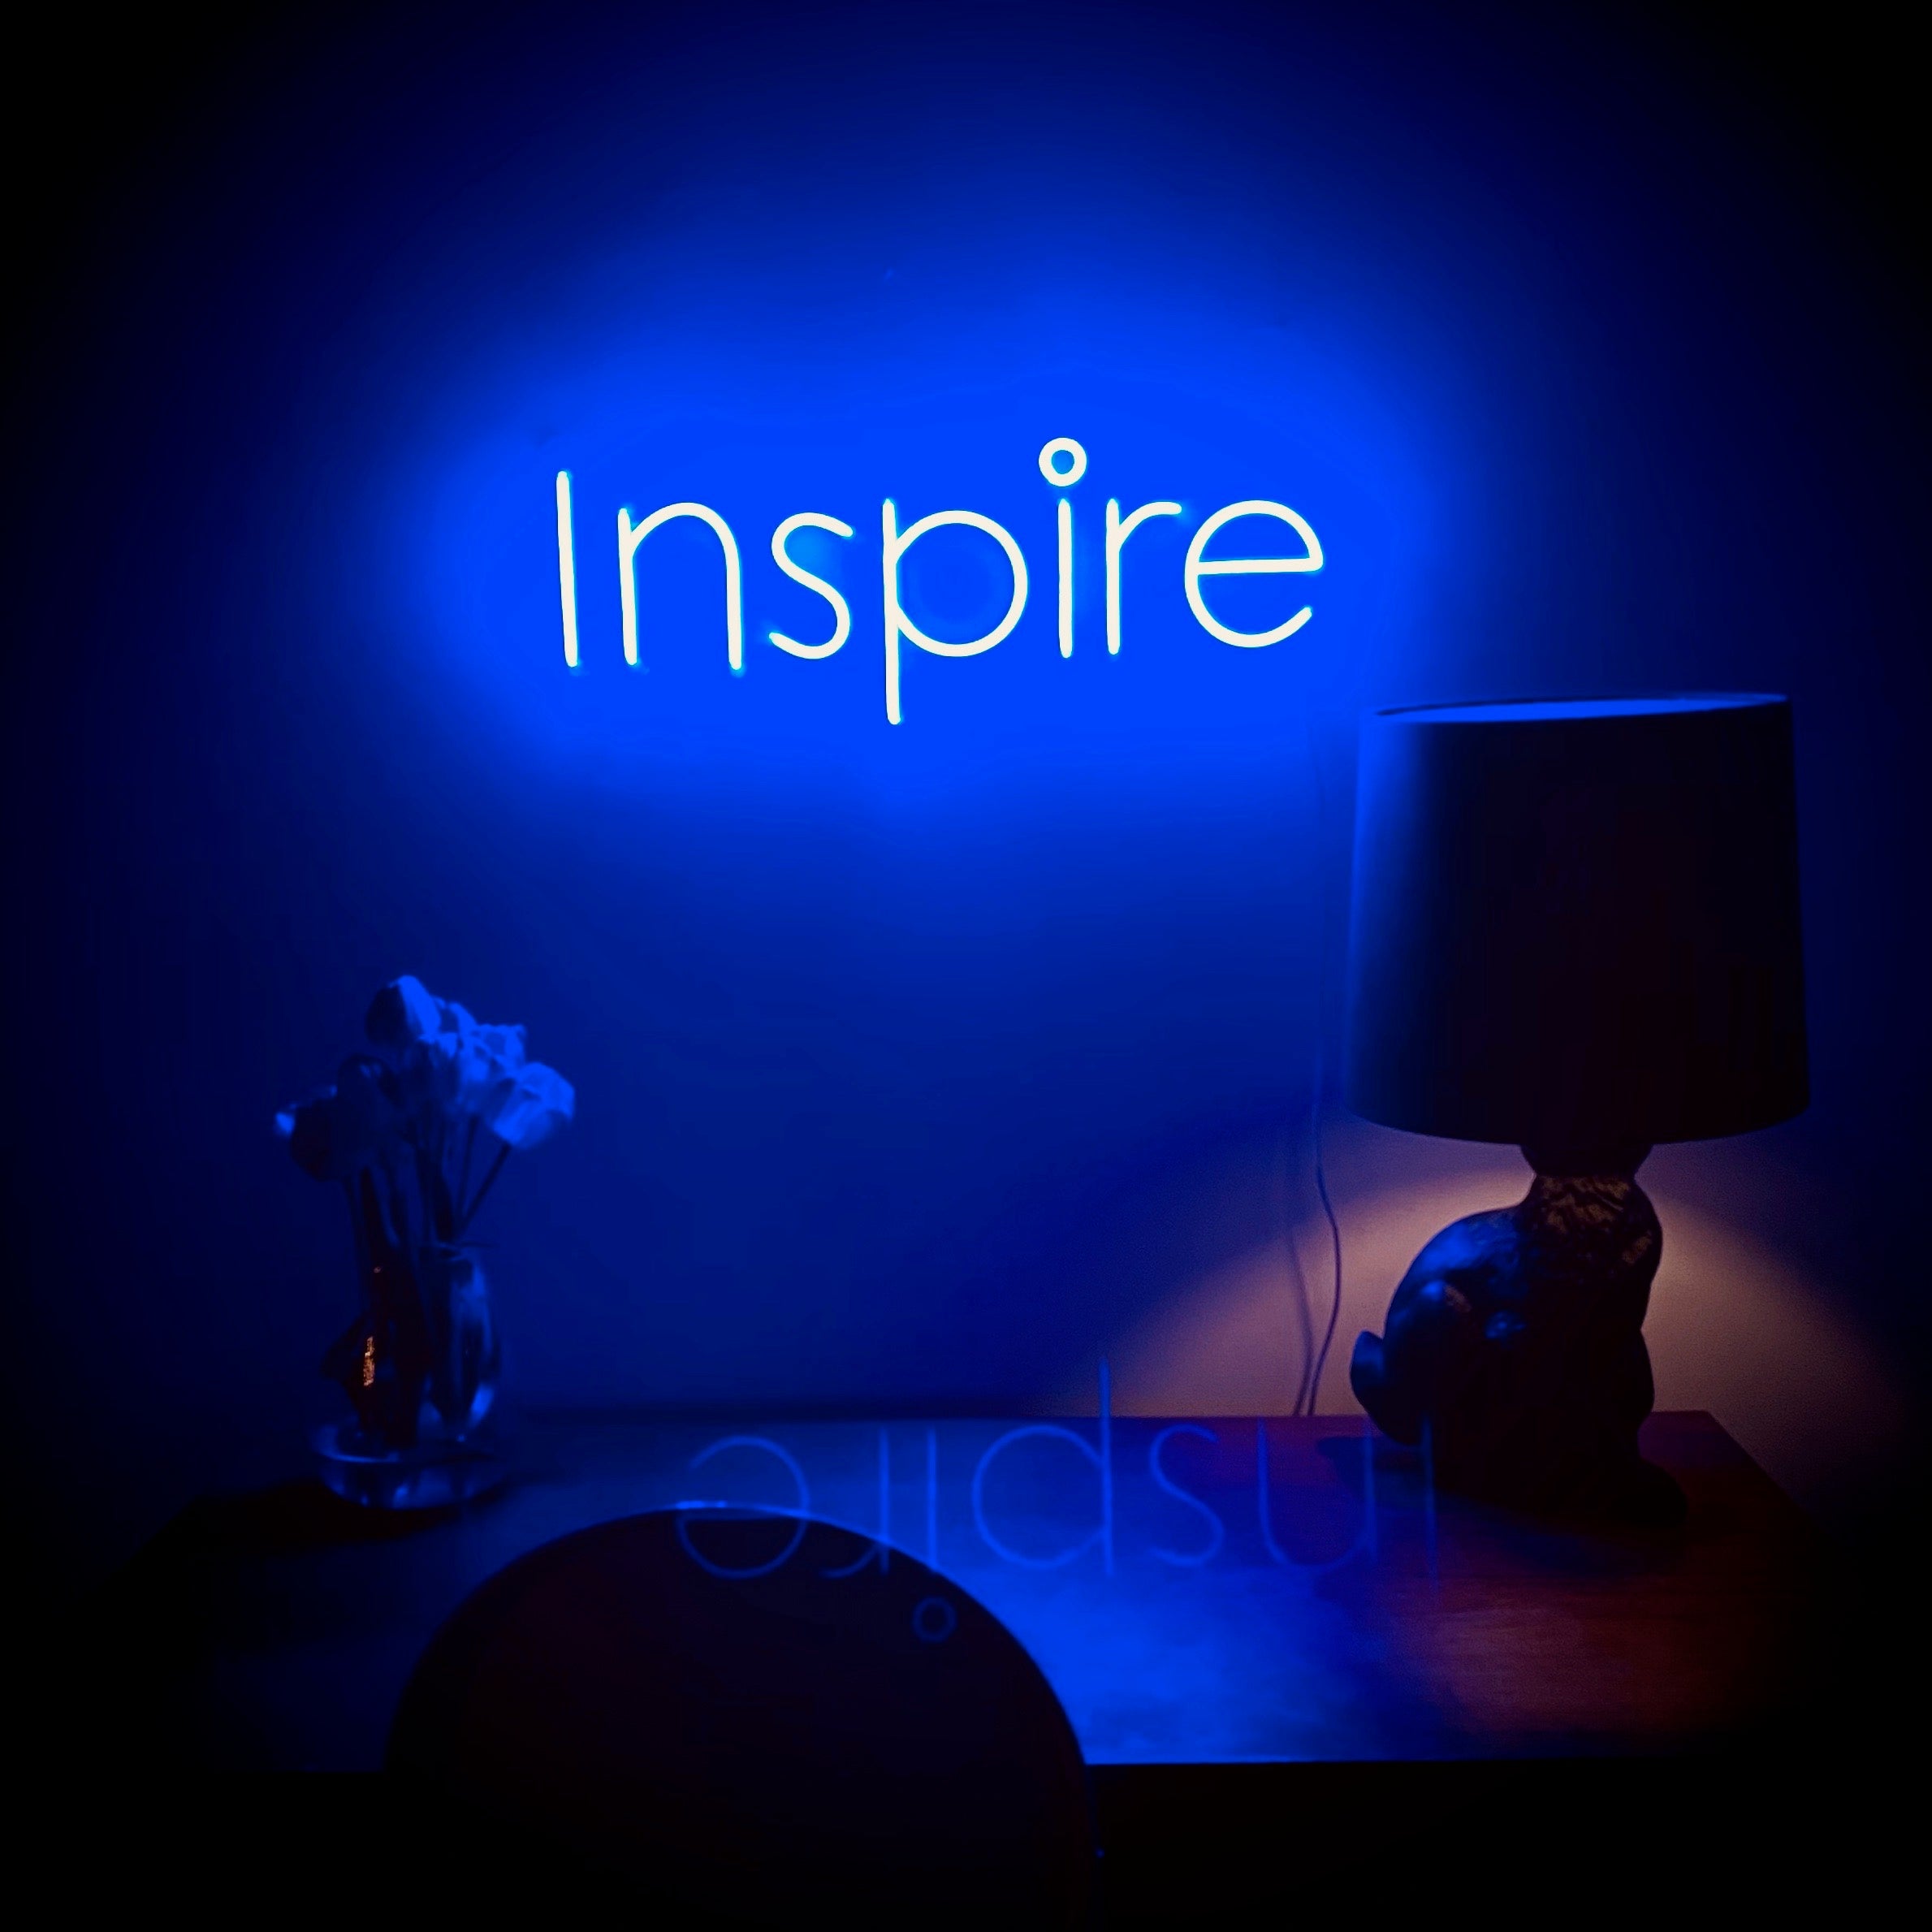 Inspire - Custom LED Neon-Style Word Sign